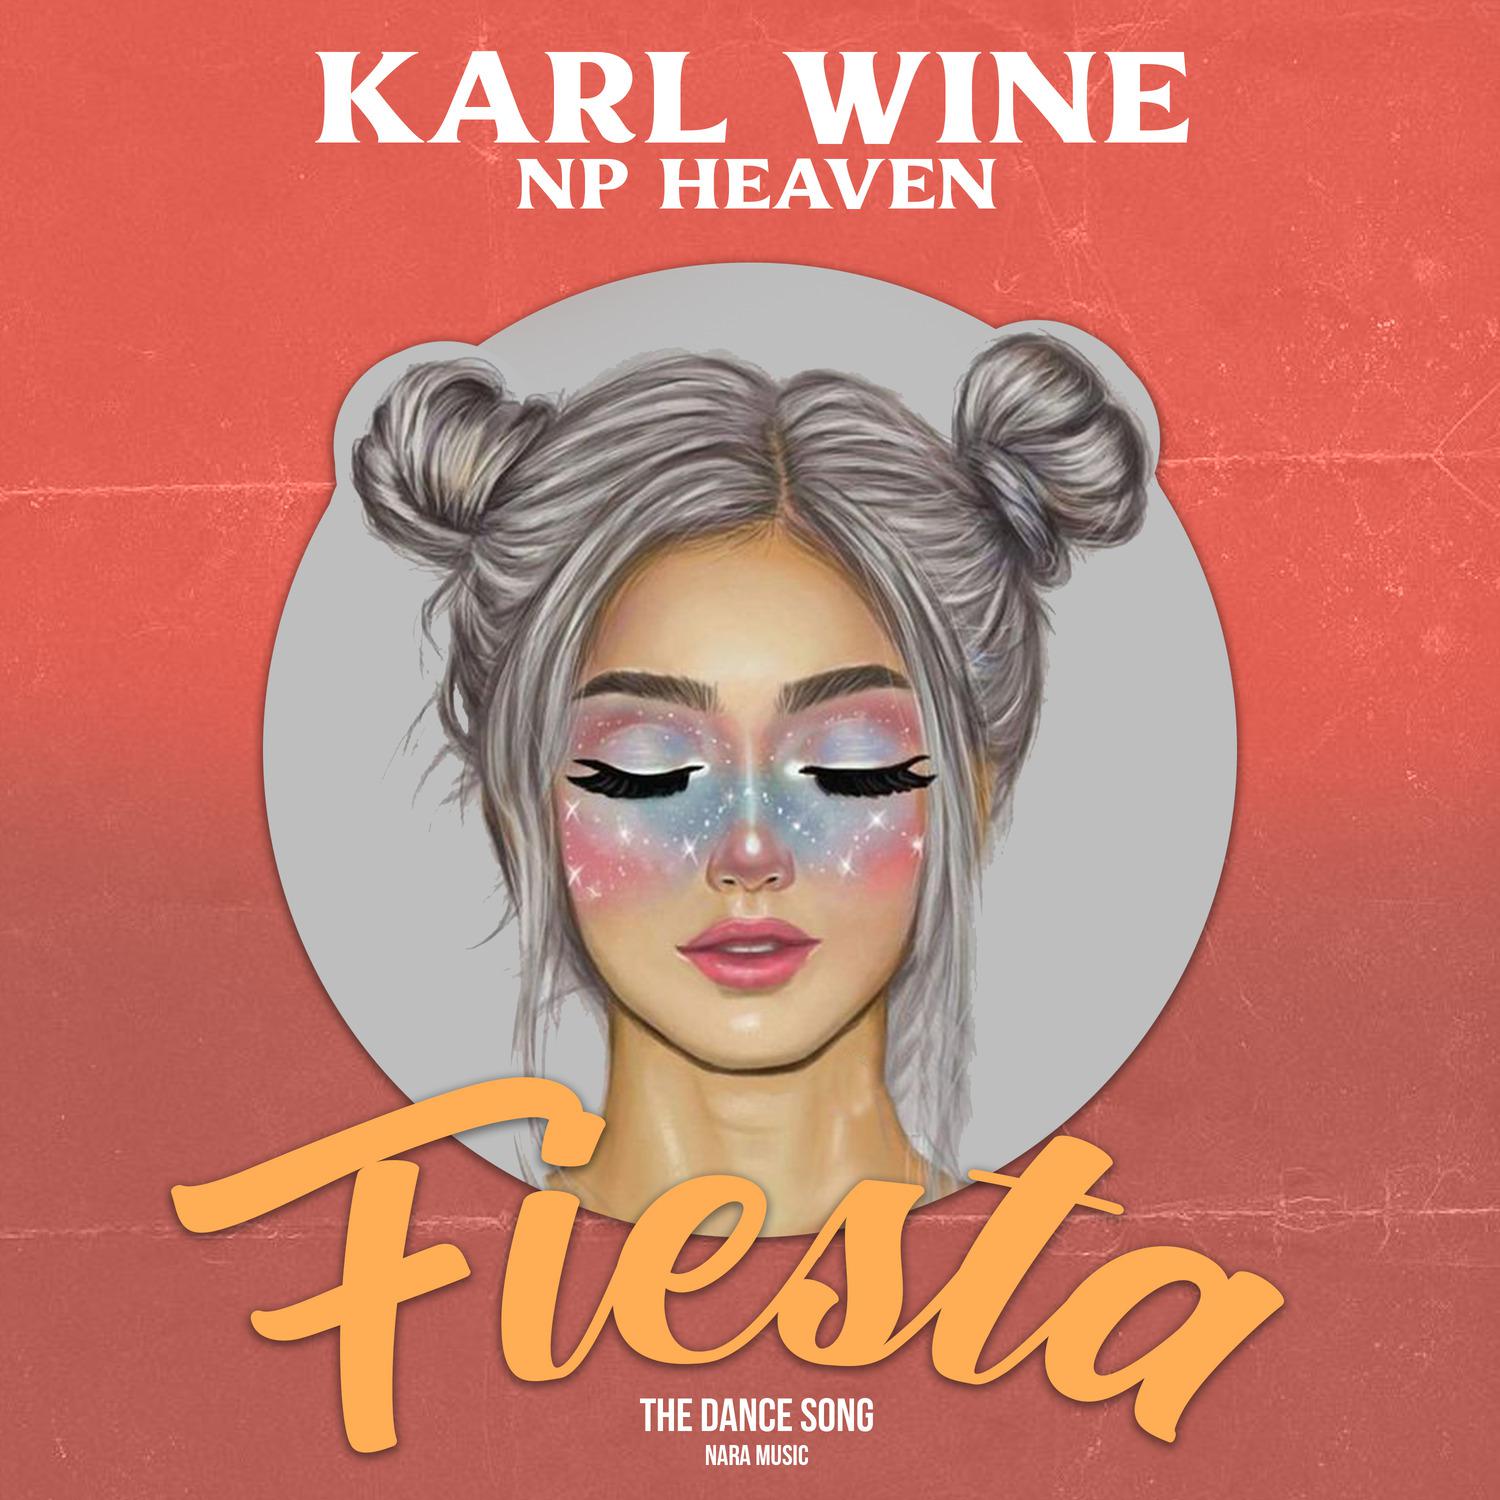 Karl Wine - Fiesta (The Dance Song)